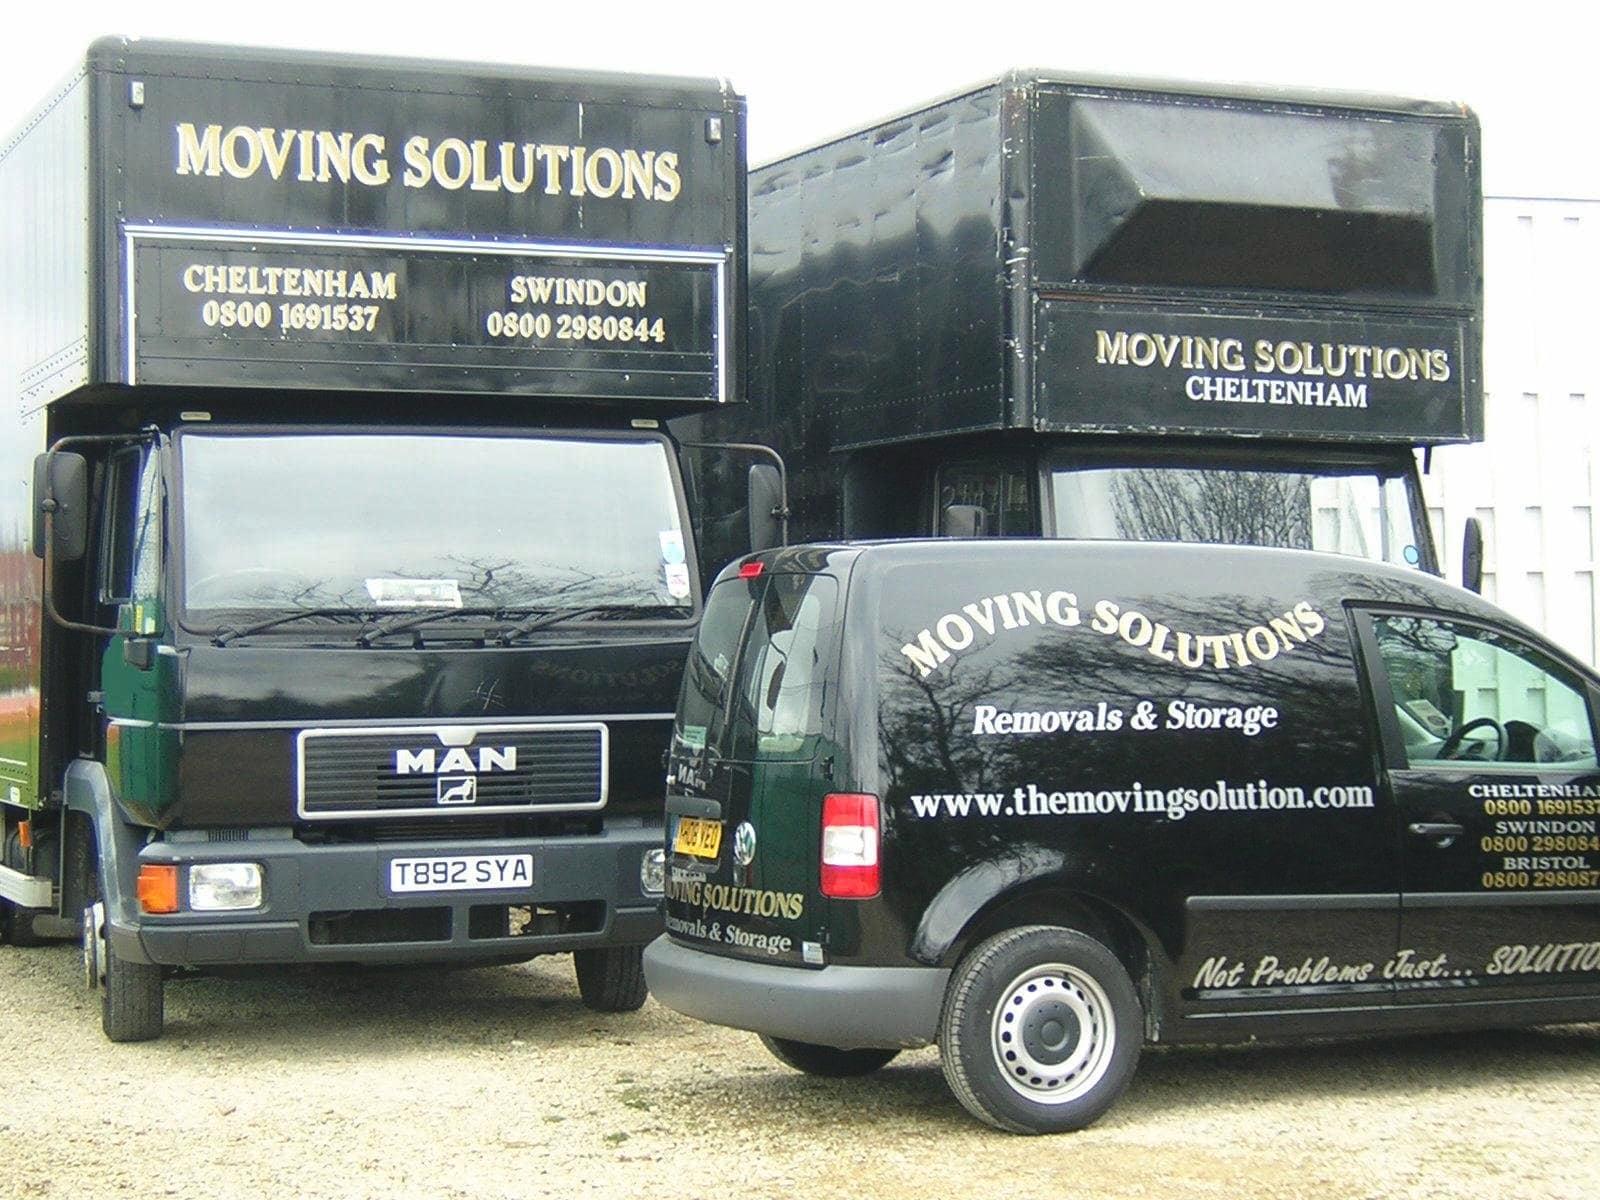 Moving Solutions Removals & Storage Cheltenham 01242 701754